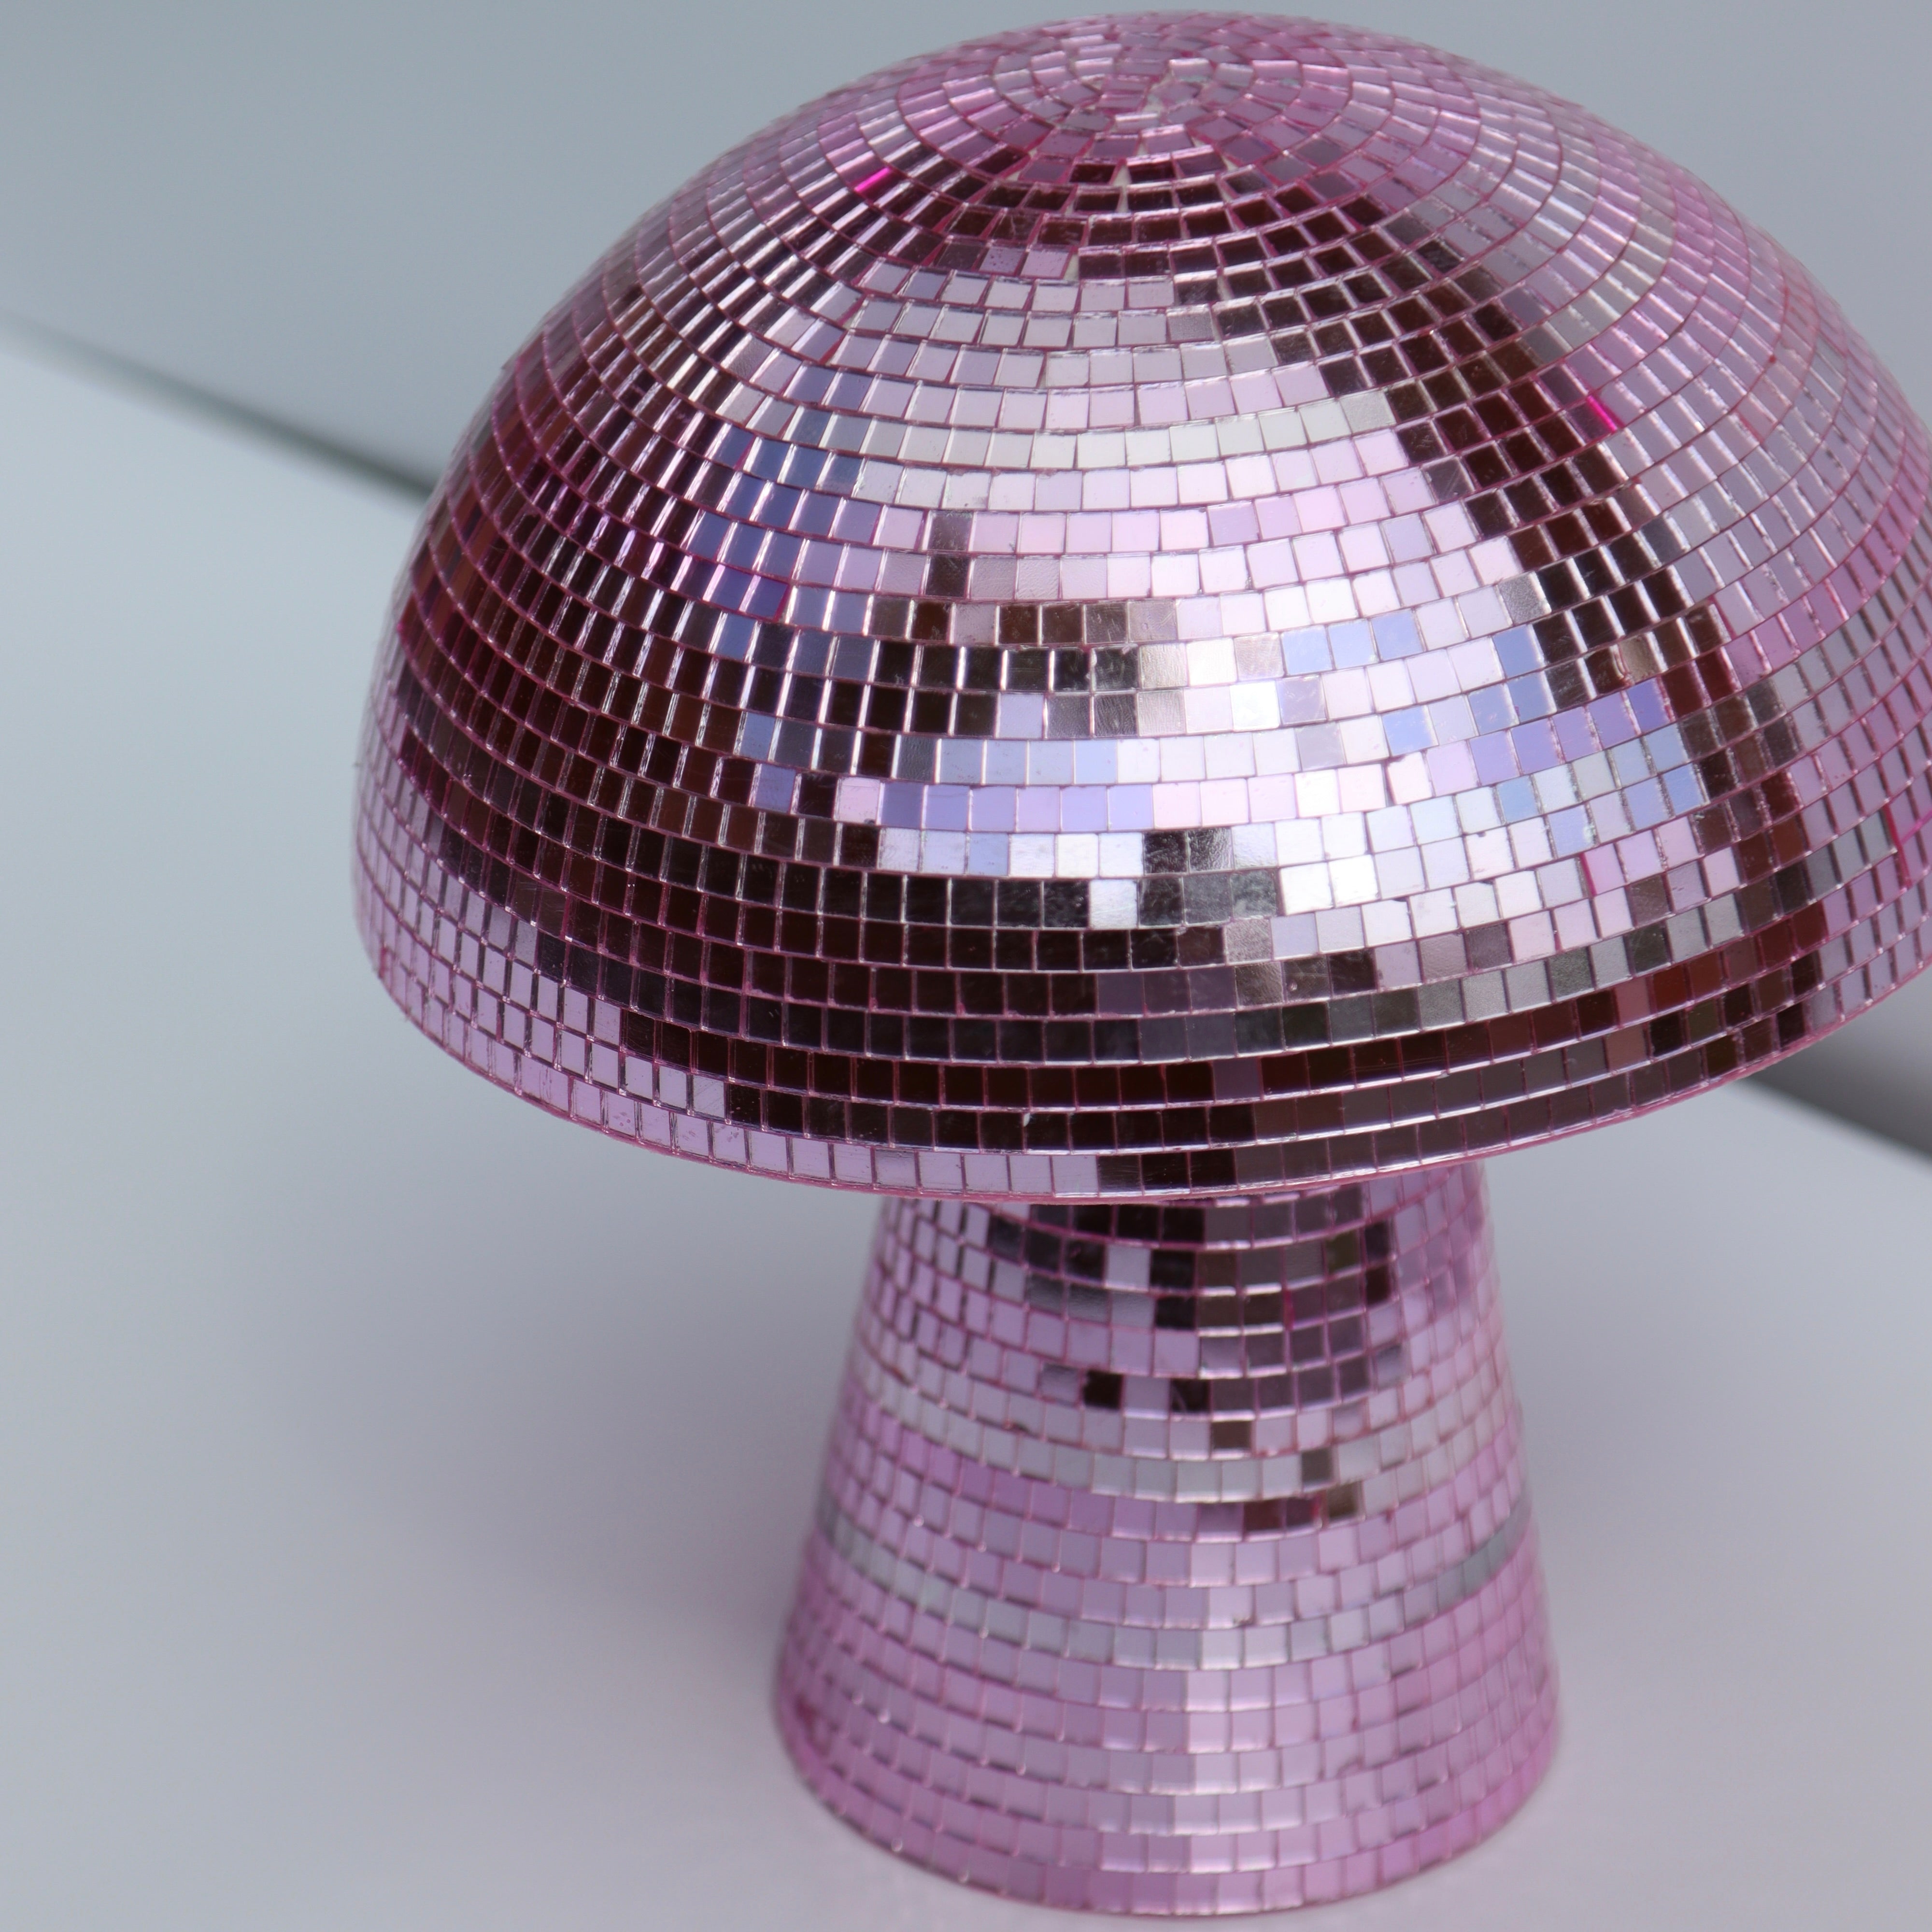 pink disco mushroom disco ball ✨